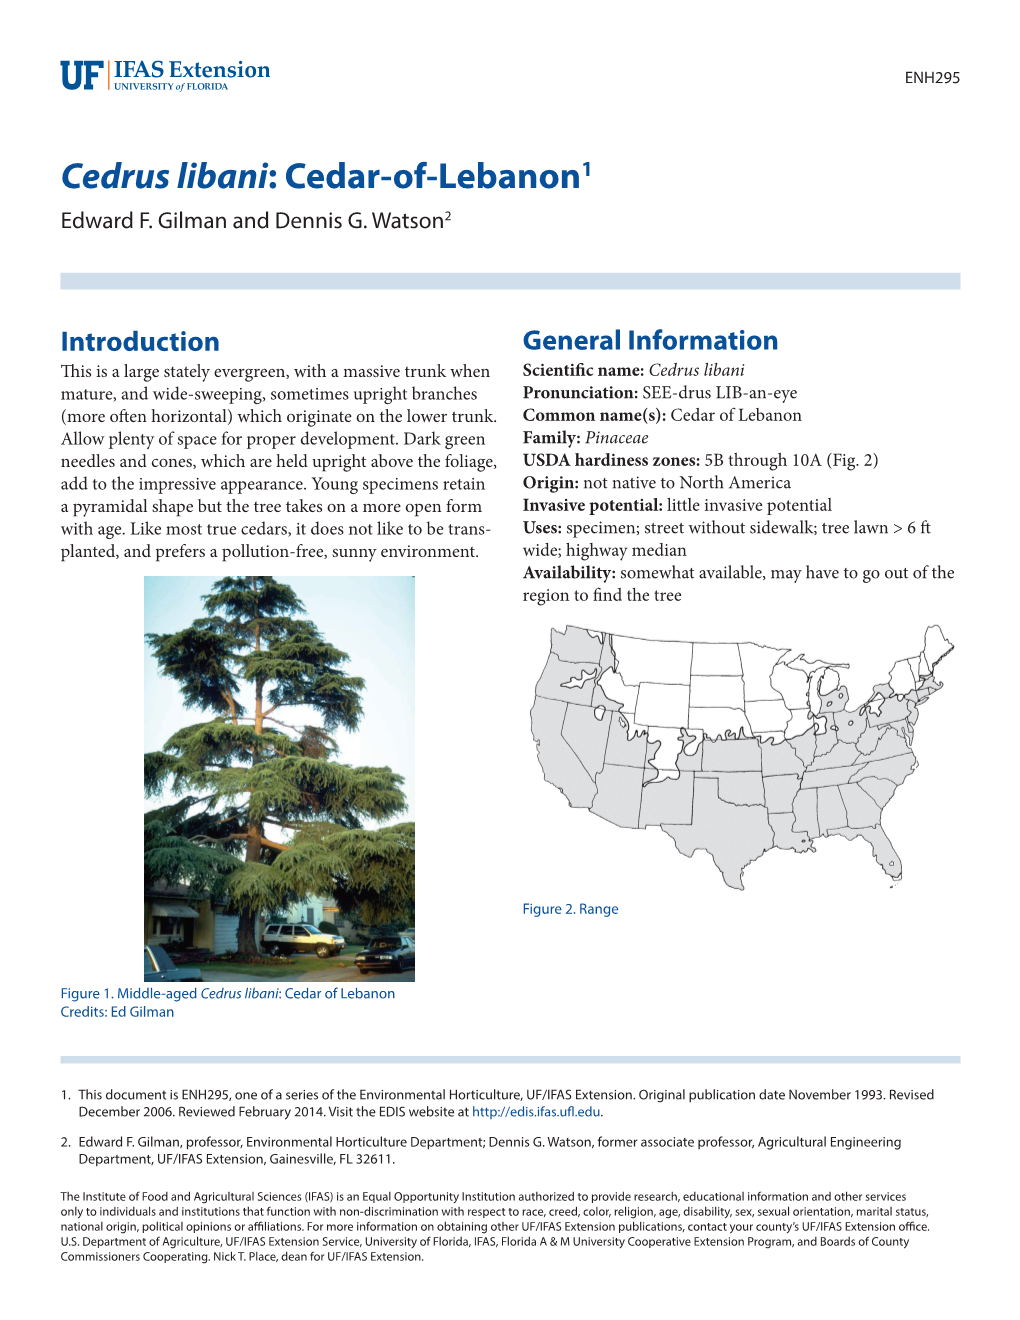 Cedrus Libani: Cedar-Of-Lebanon1 Edward F